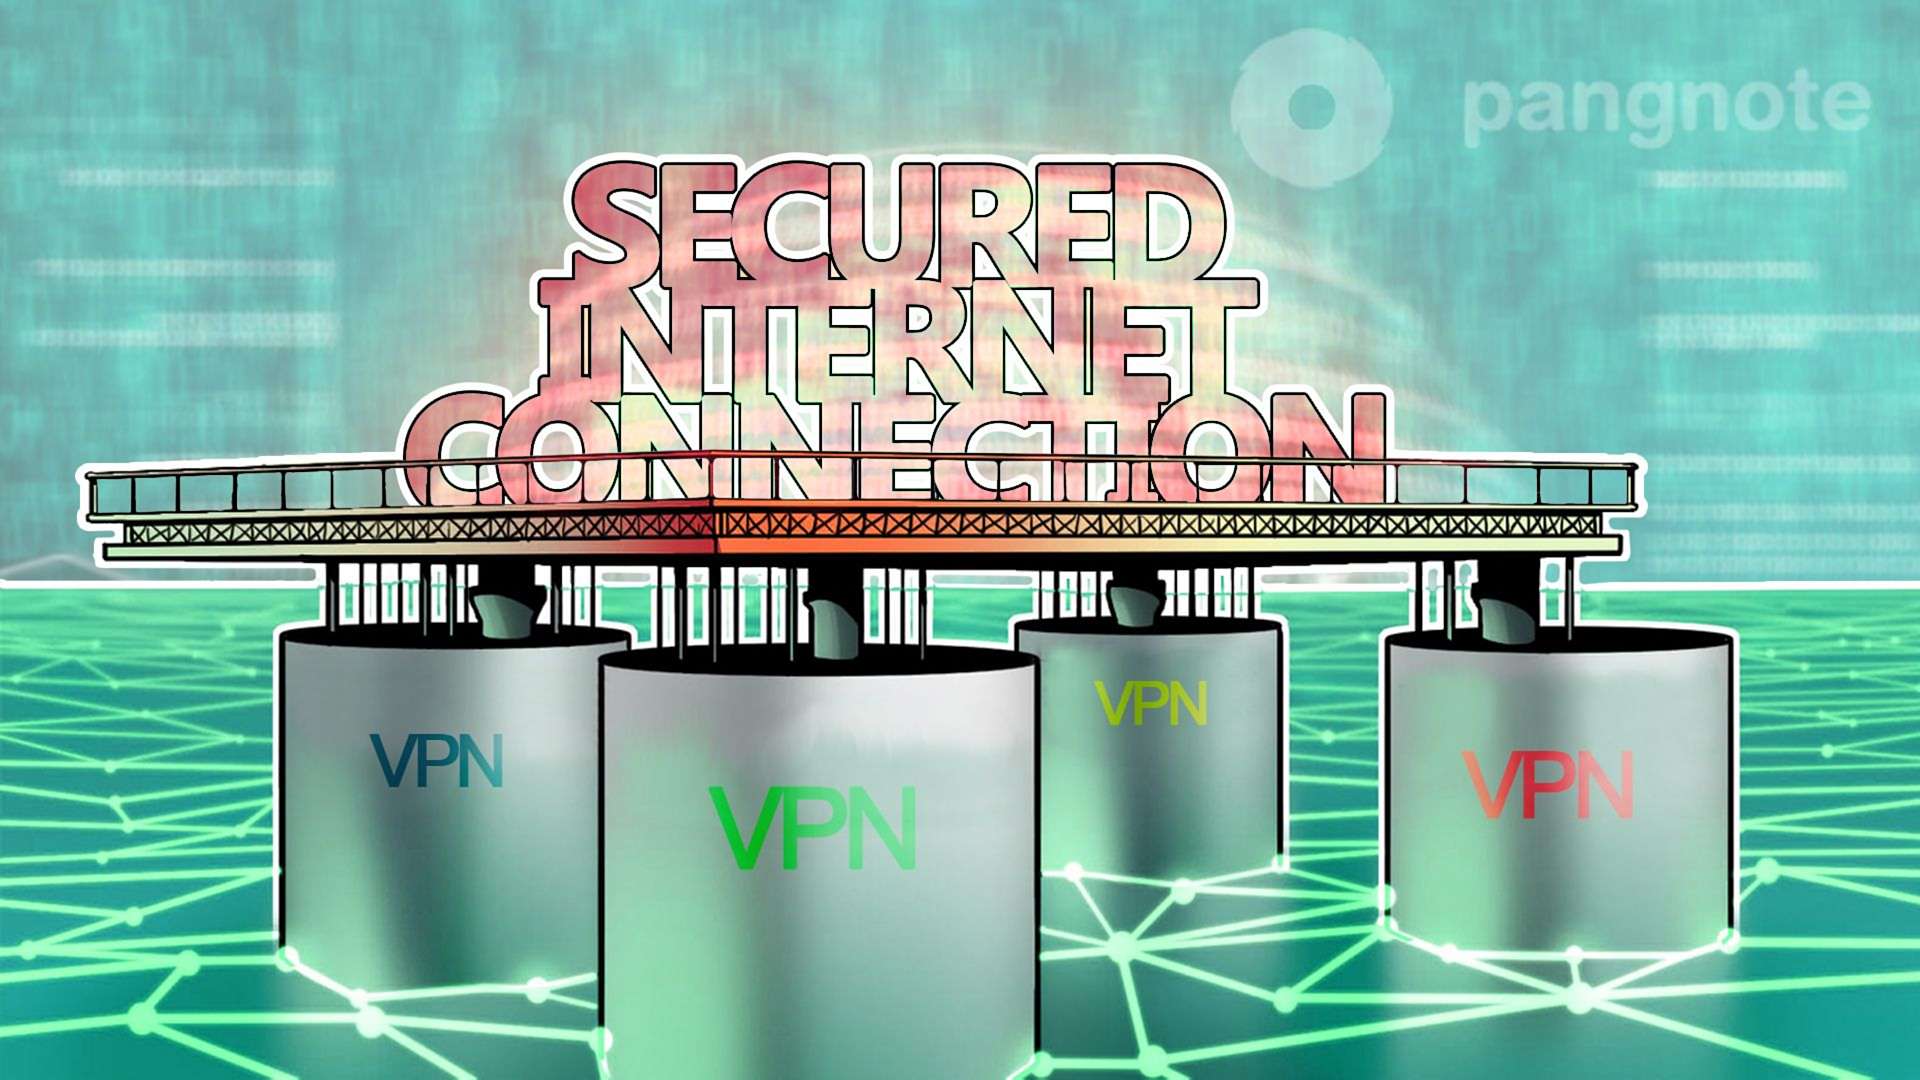 Types of VPN for secured Internet connection